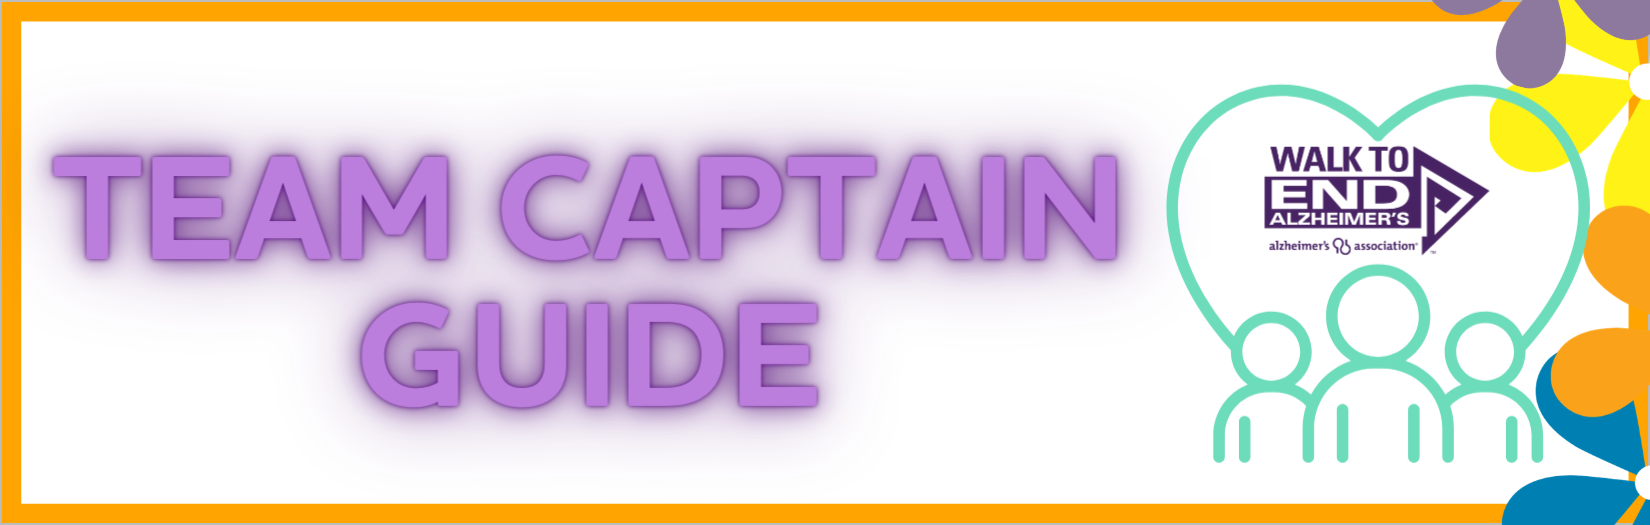 Team Captain Guide Button